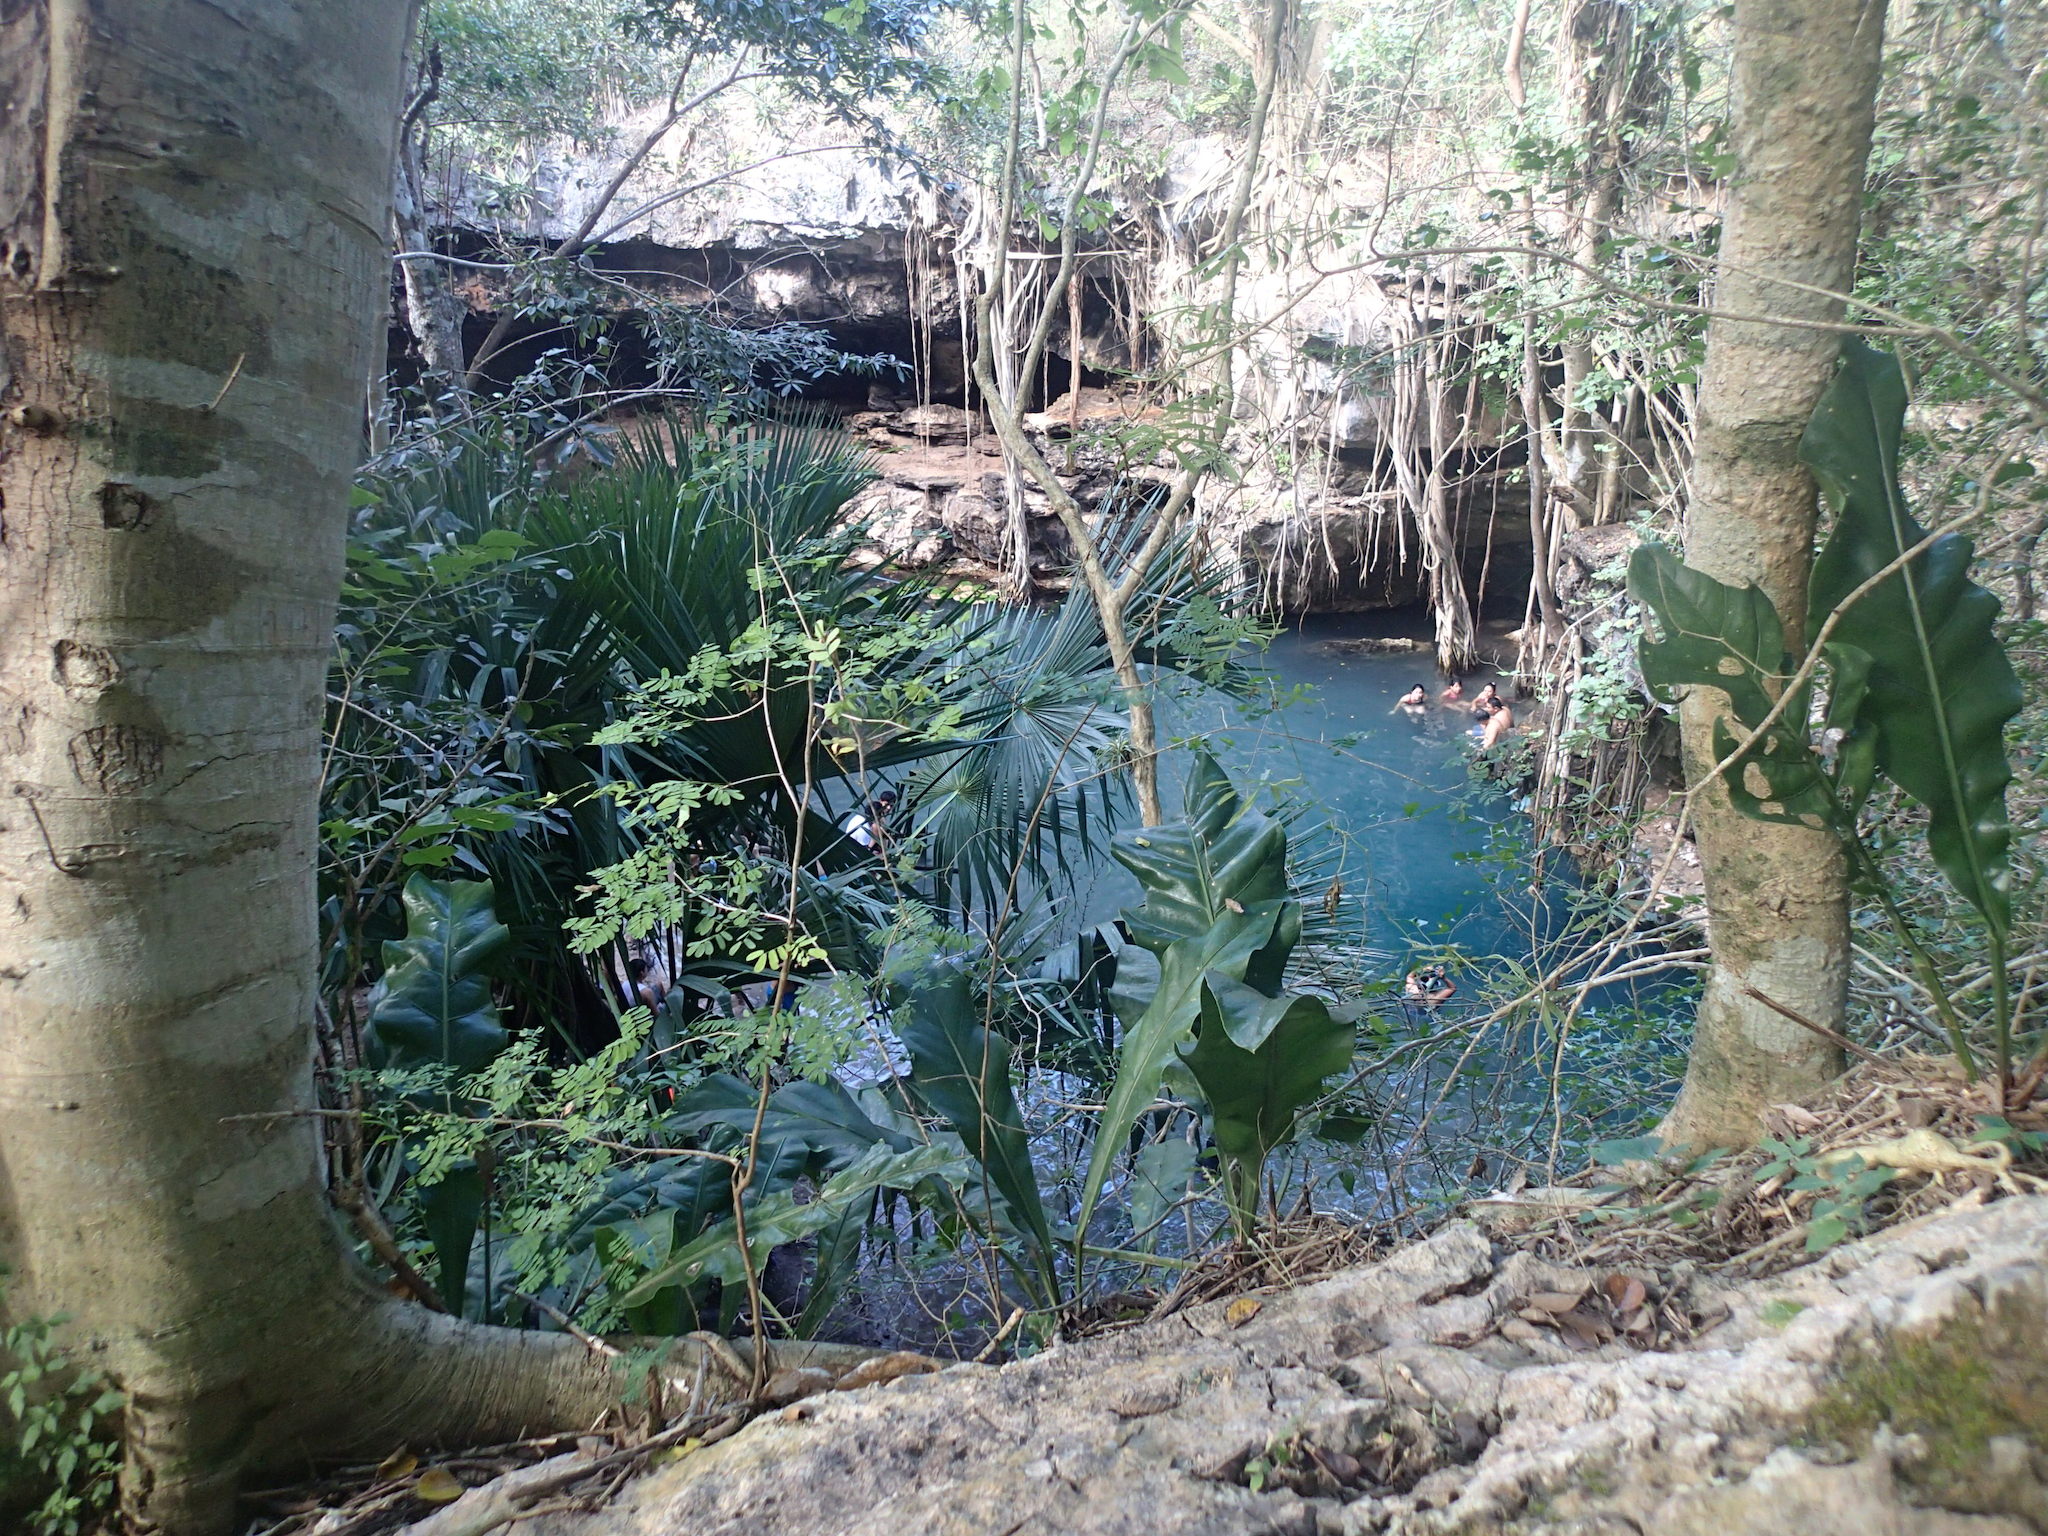 above ground cenotes